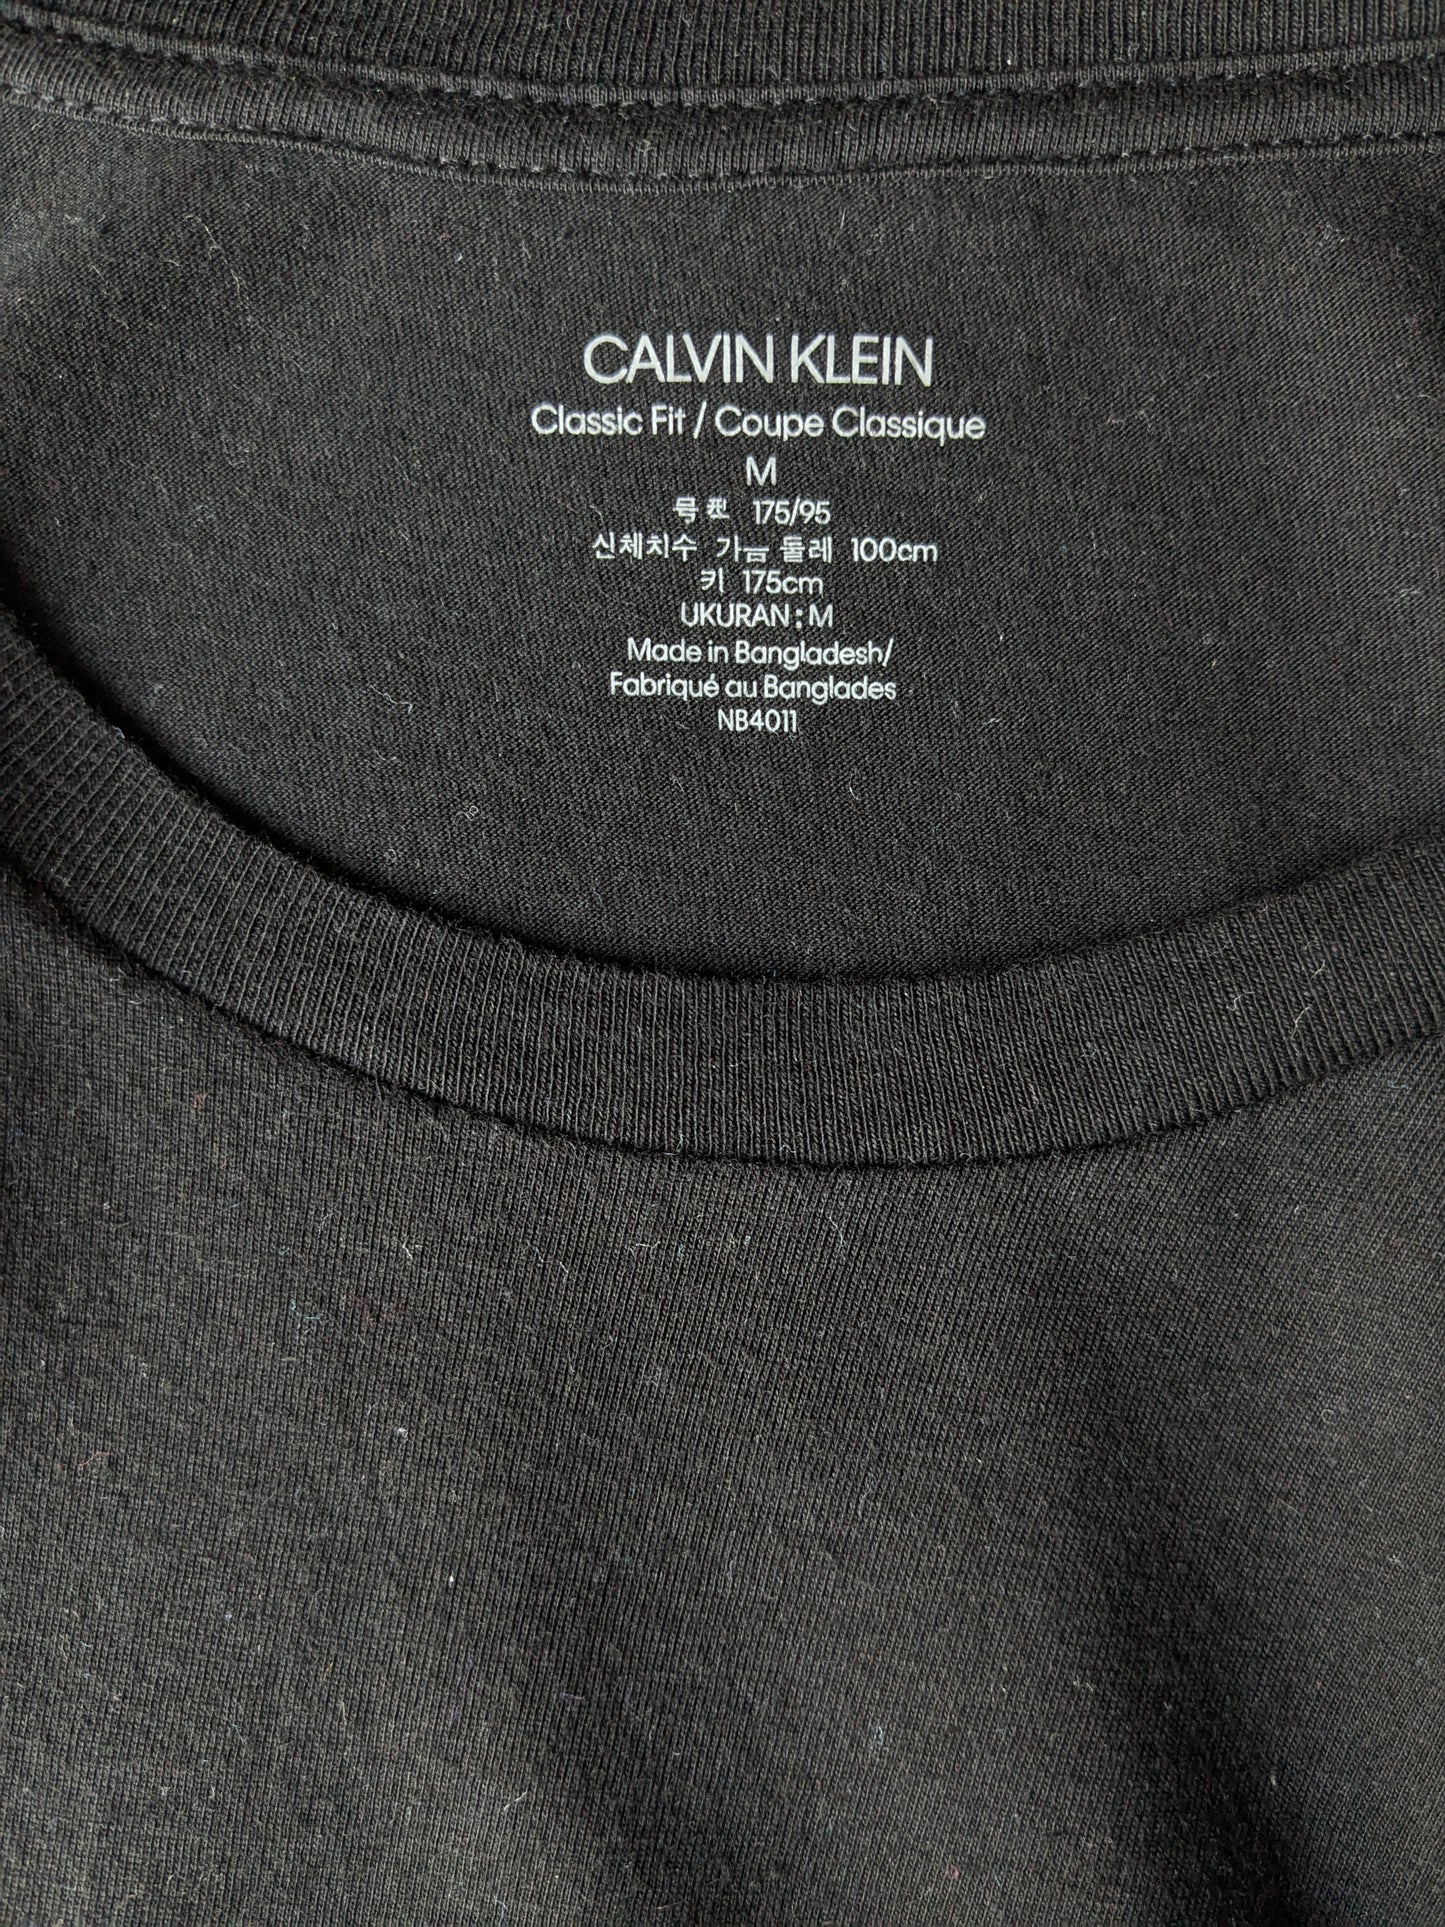 Calvin Klein shirt. Zwart gekleurd. Maat M.